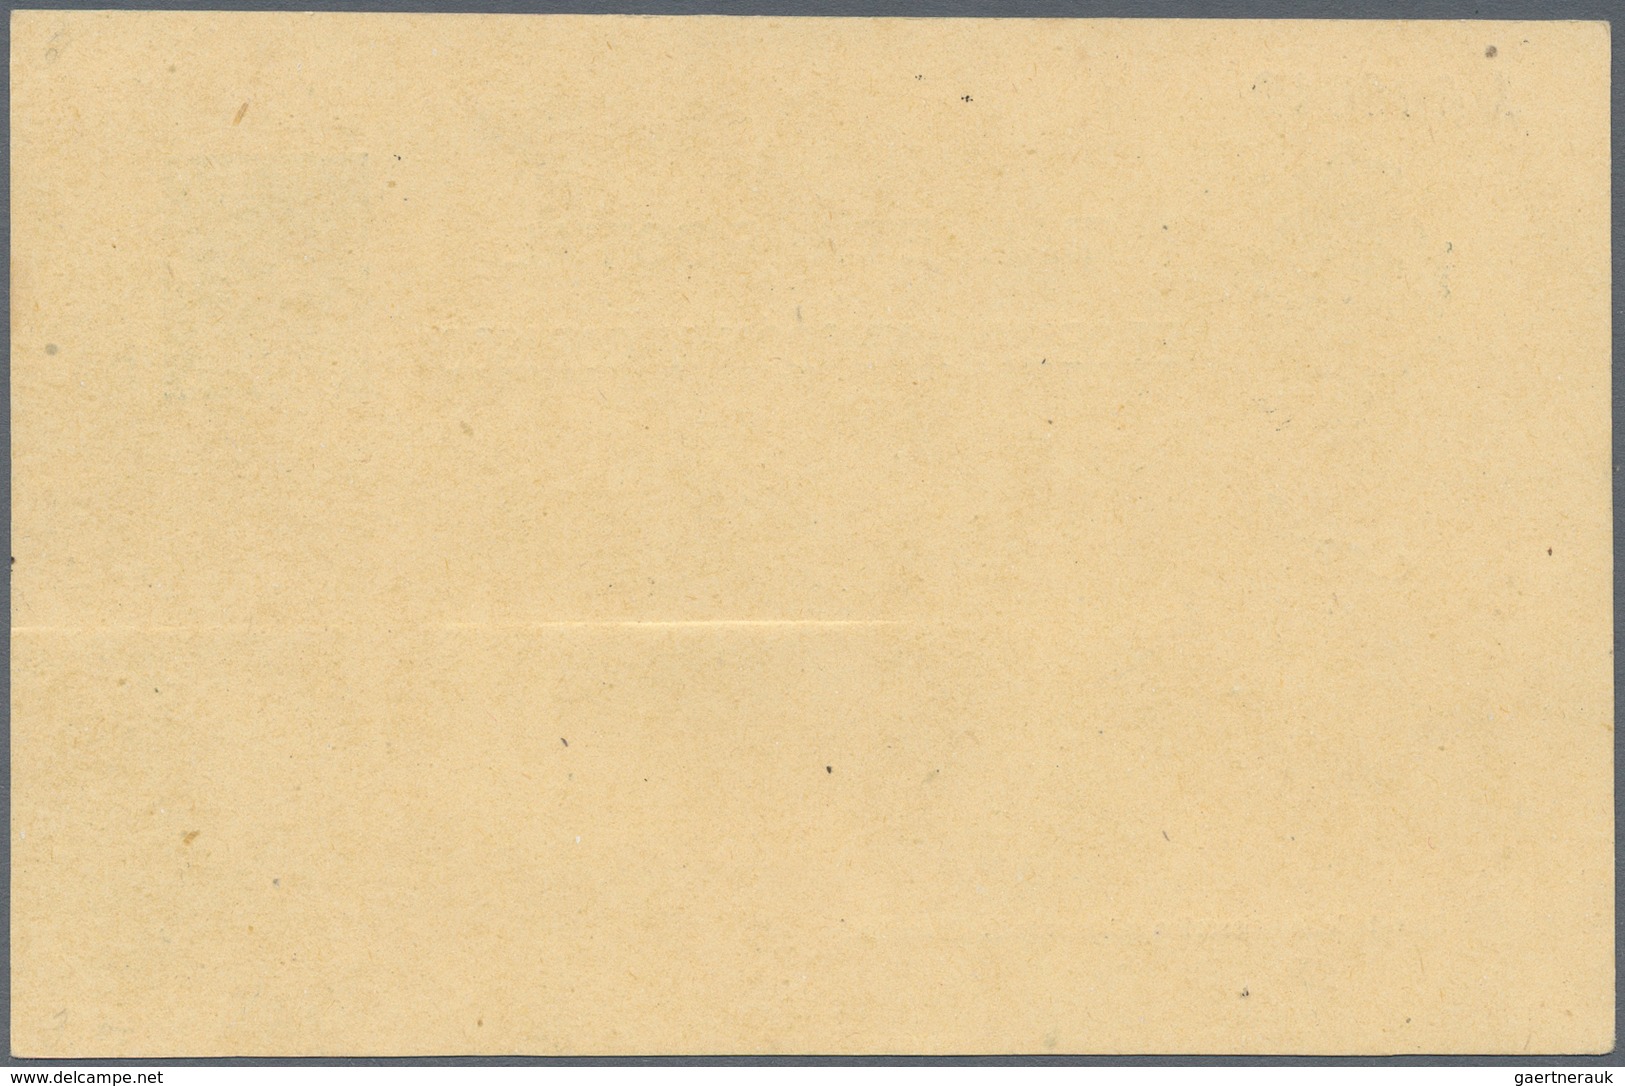 Spanien - Ganzsachen: 1905/1907. Lot Of 3 Postcards Alfonso XIII "Elobey, Annobon Y Corisco": One Ca - 1850-1931